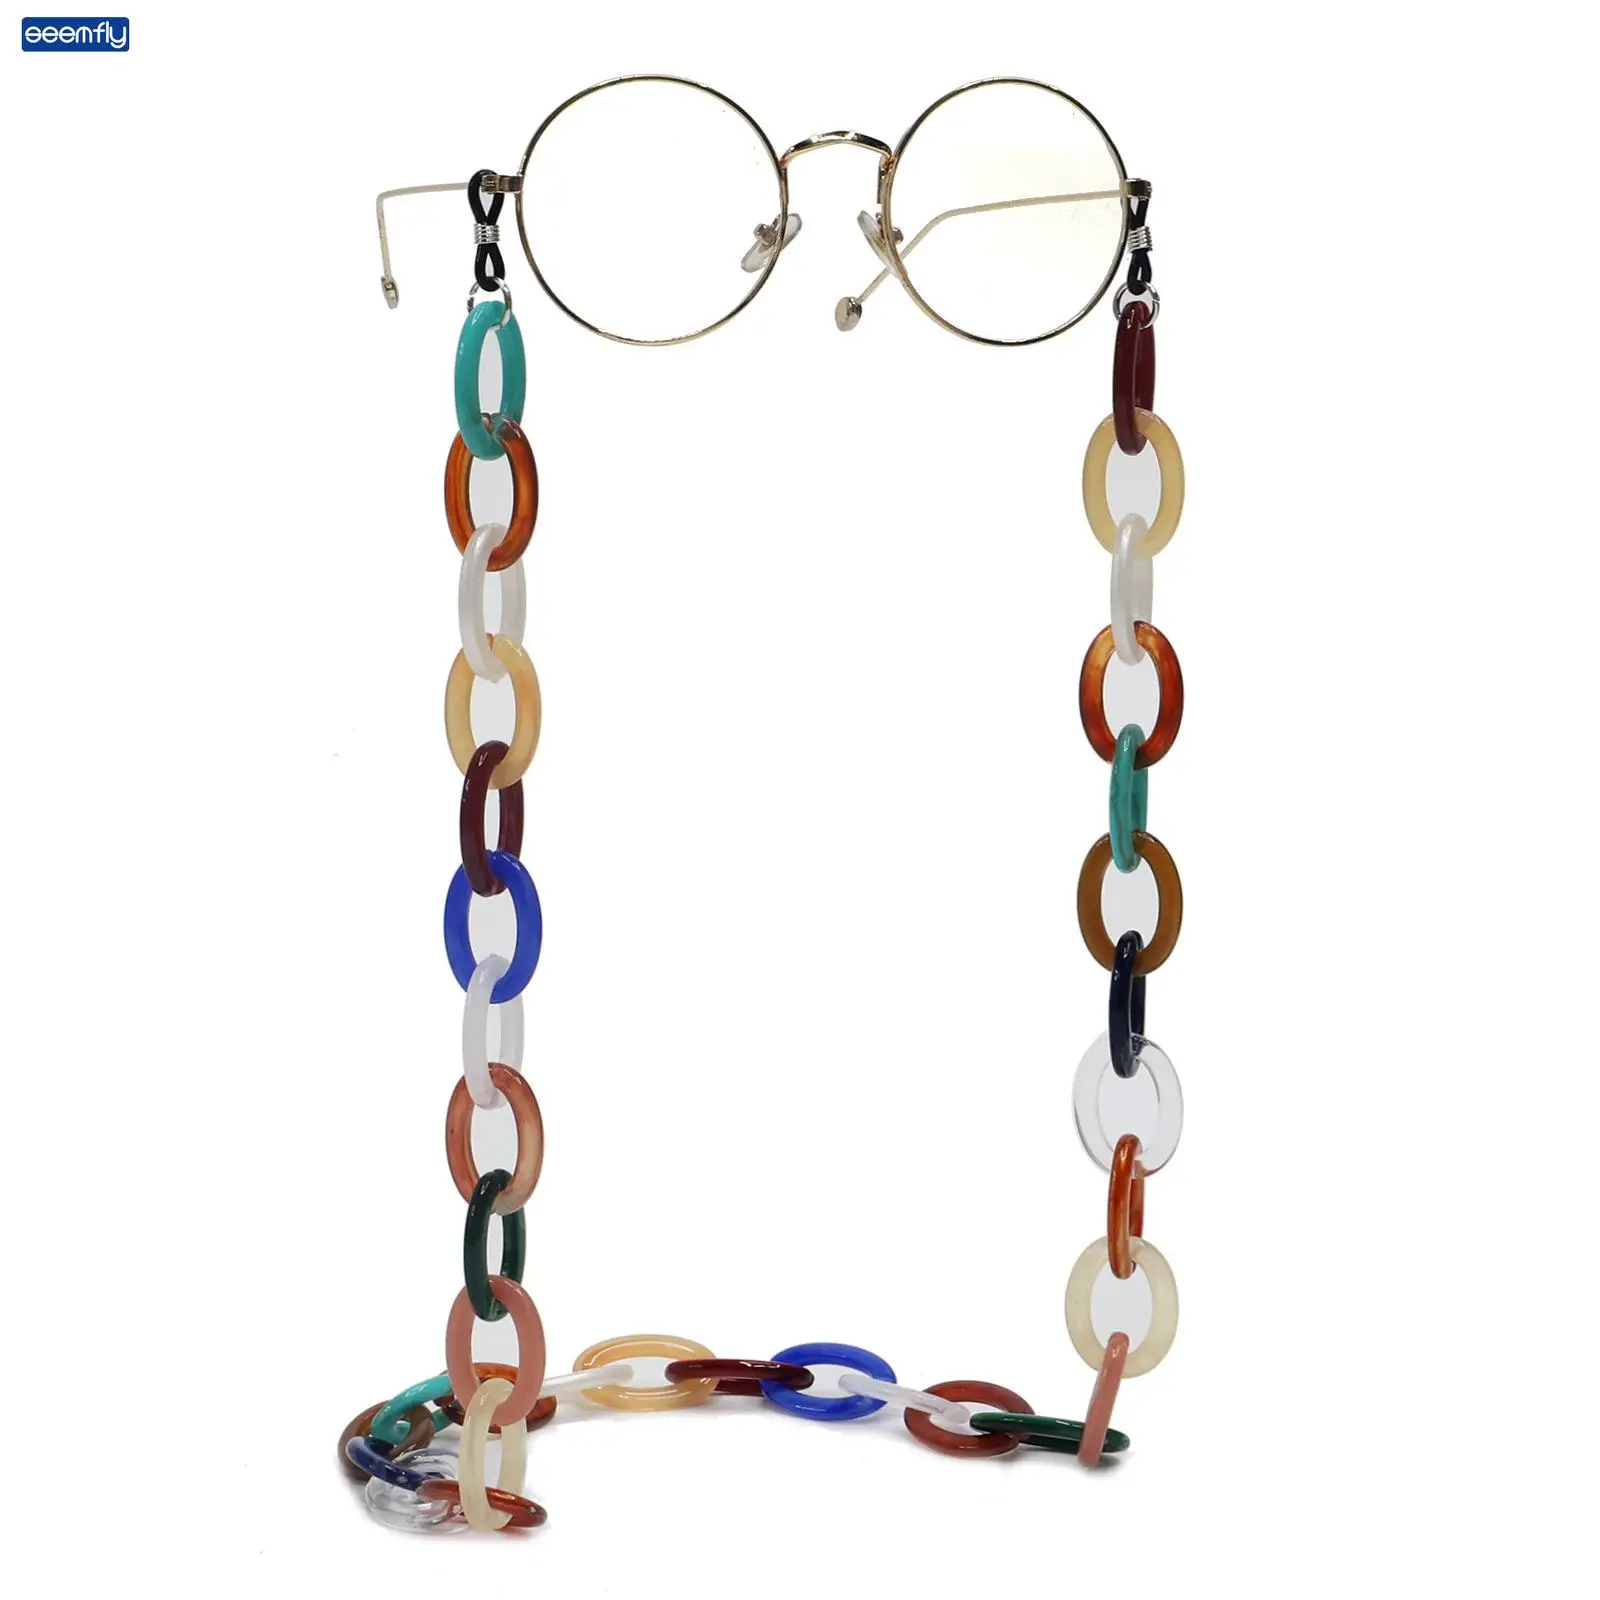 Seemfly Glasses Chain Resin Acrylic Men Women's Neck Chain for Mask Glassware Fashion Reading Eyeglasses Cord Neck Strap Rope